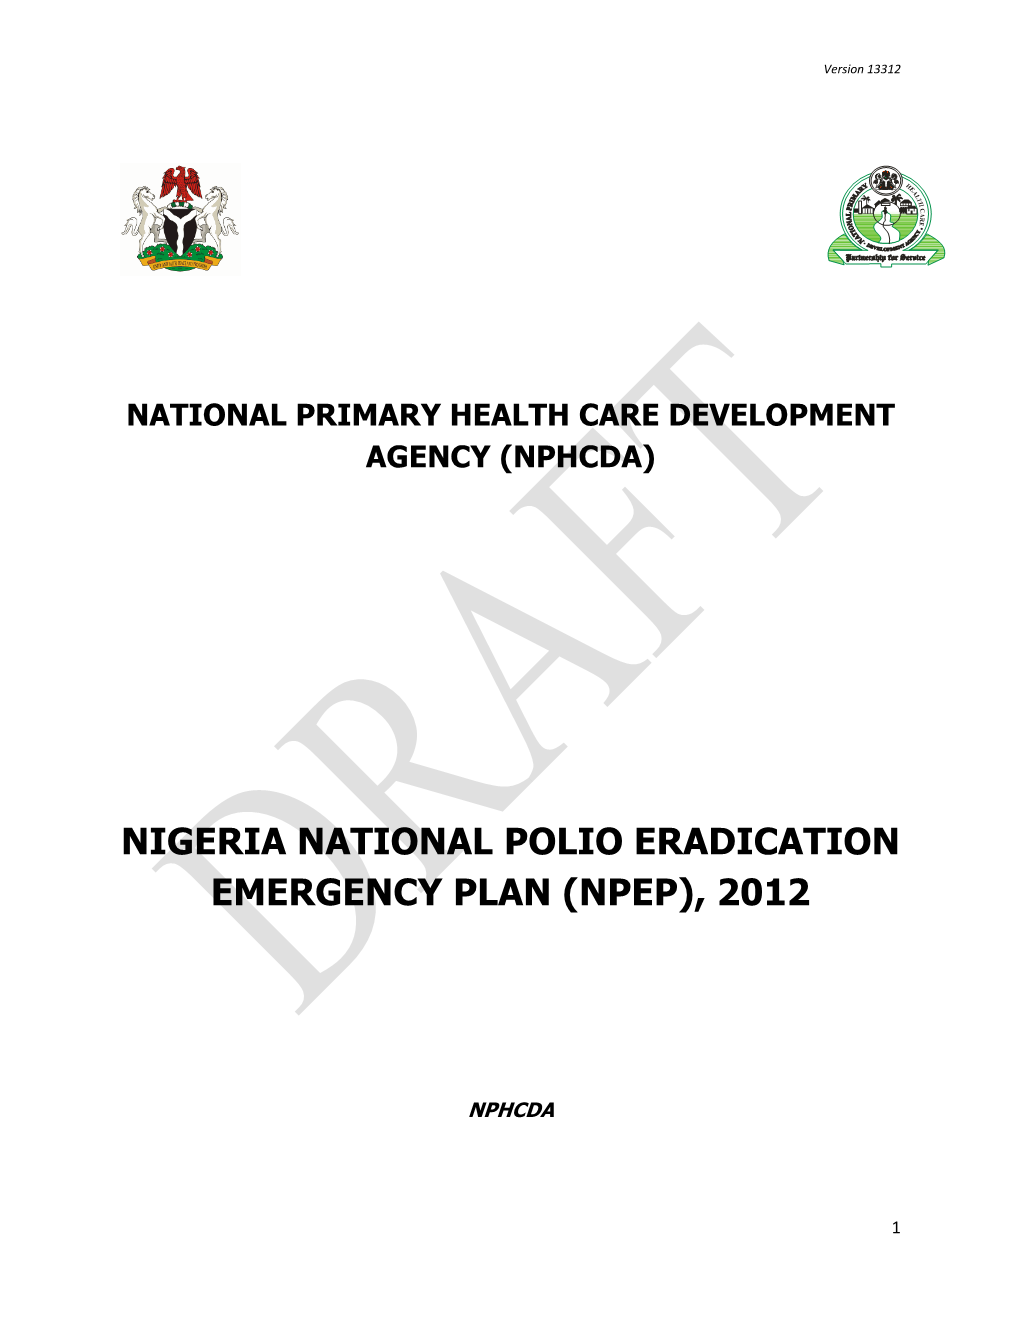 Nigeria National Polio Eradication Emergency Plan (Npep), 2012